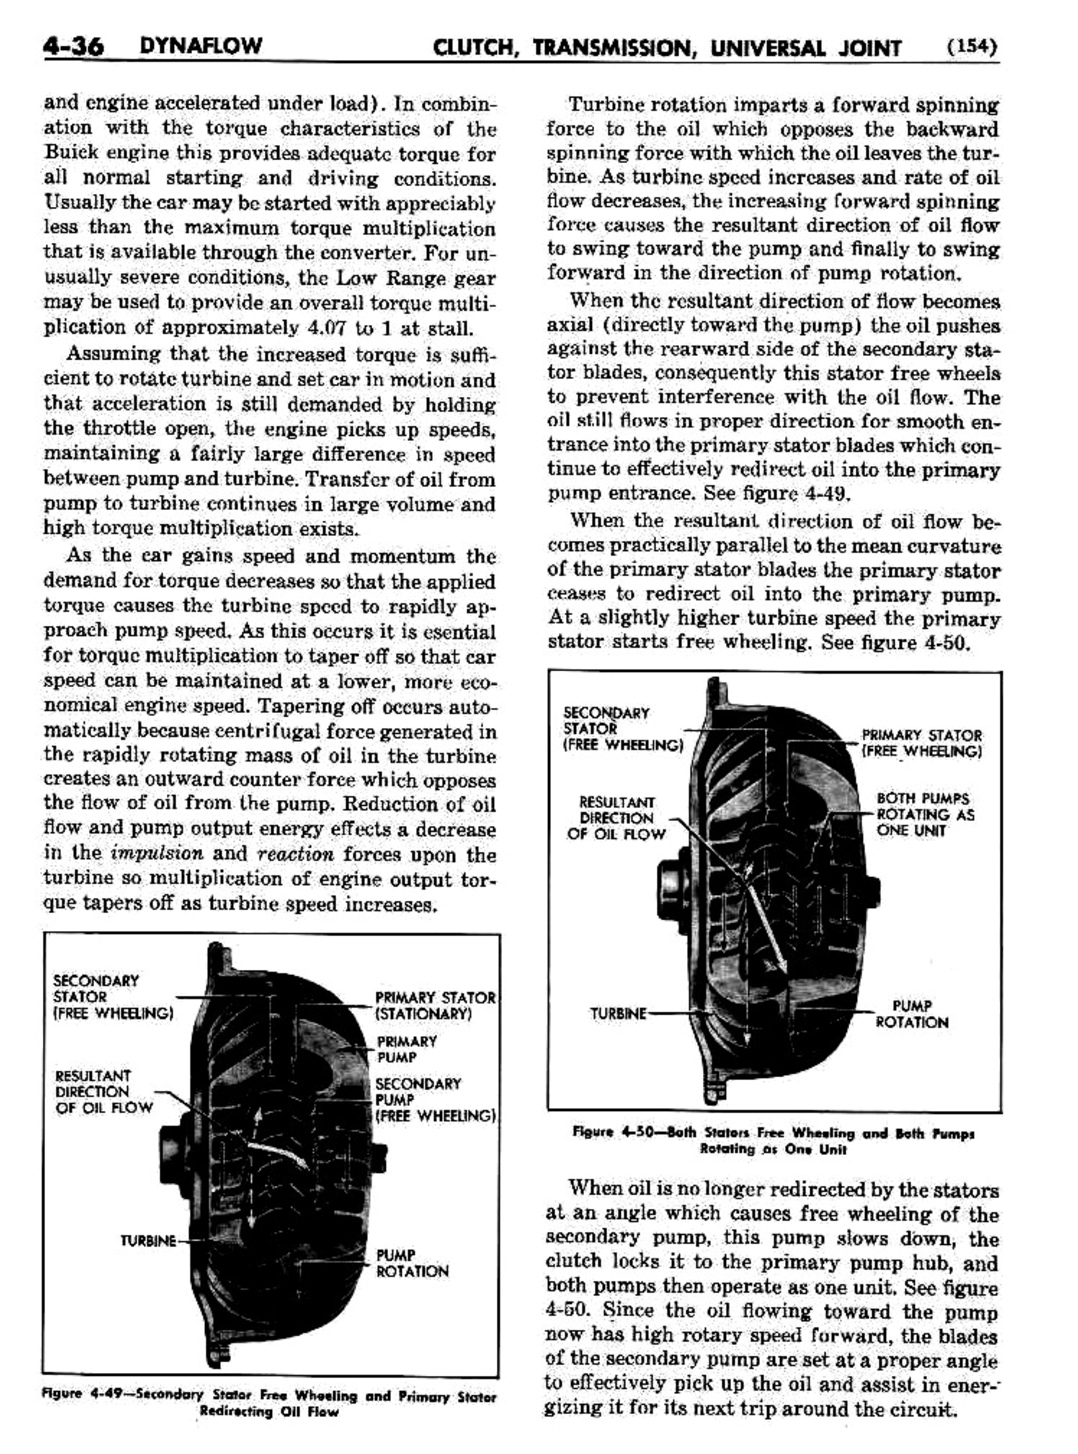 n_05 1951 Buick Shop Manual - Transmission-036-036.jpg